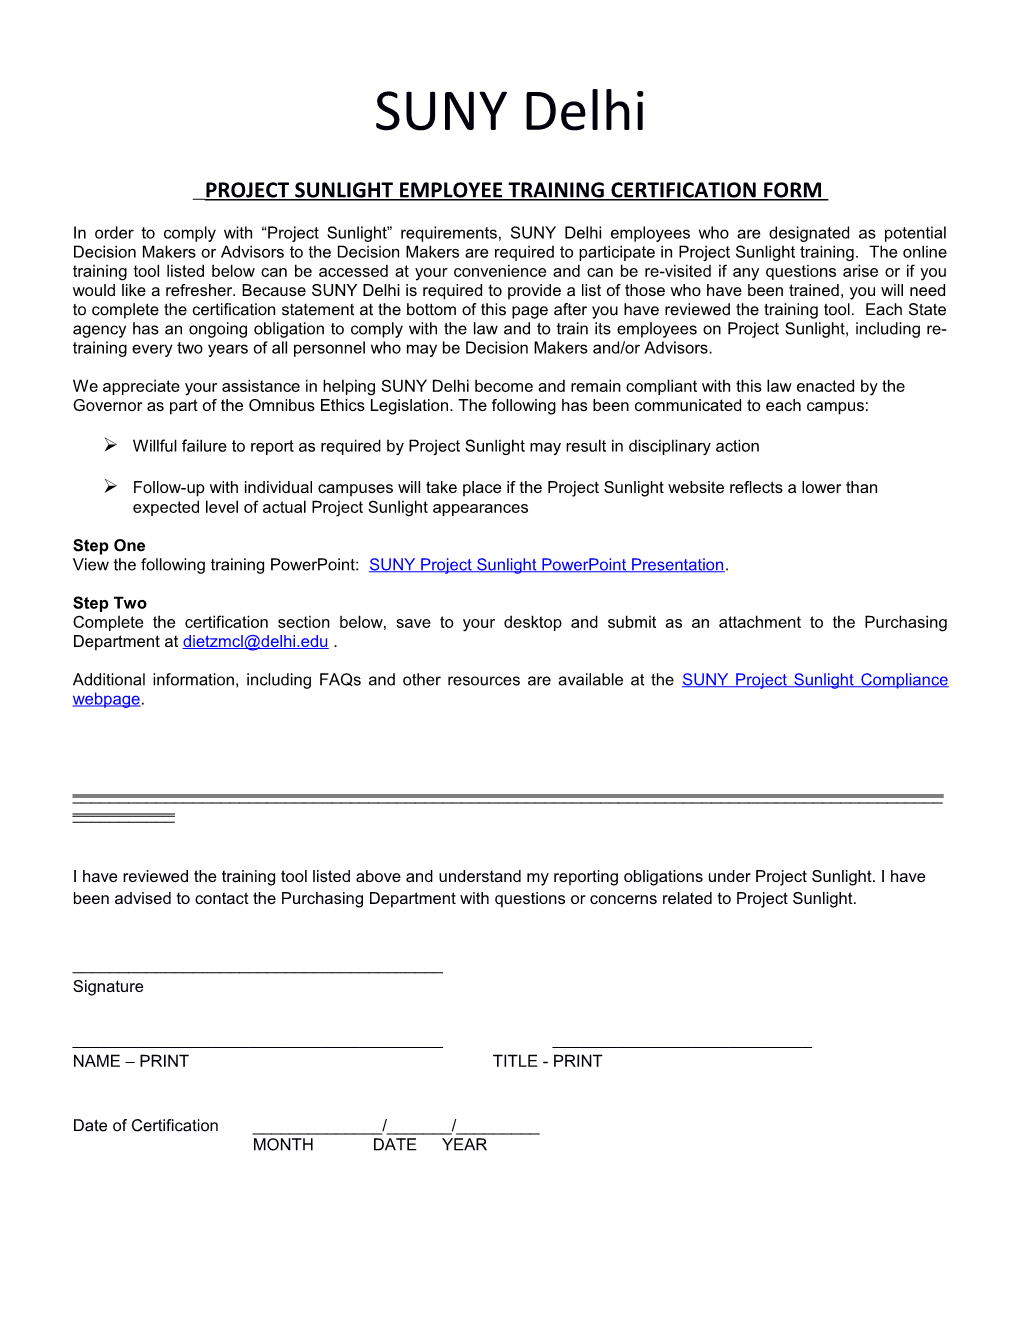 Project Sunlight Employee Training Certification Form